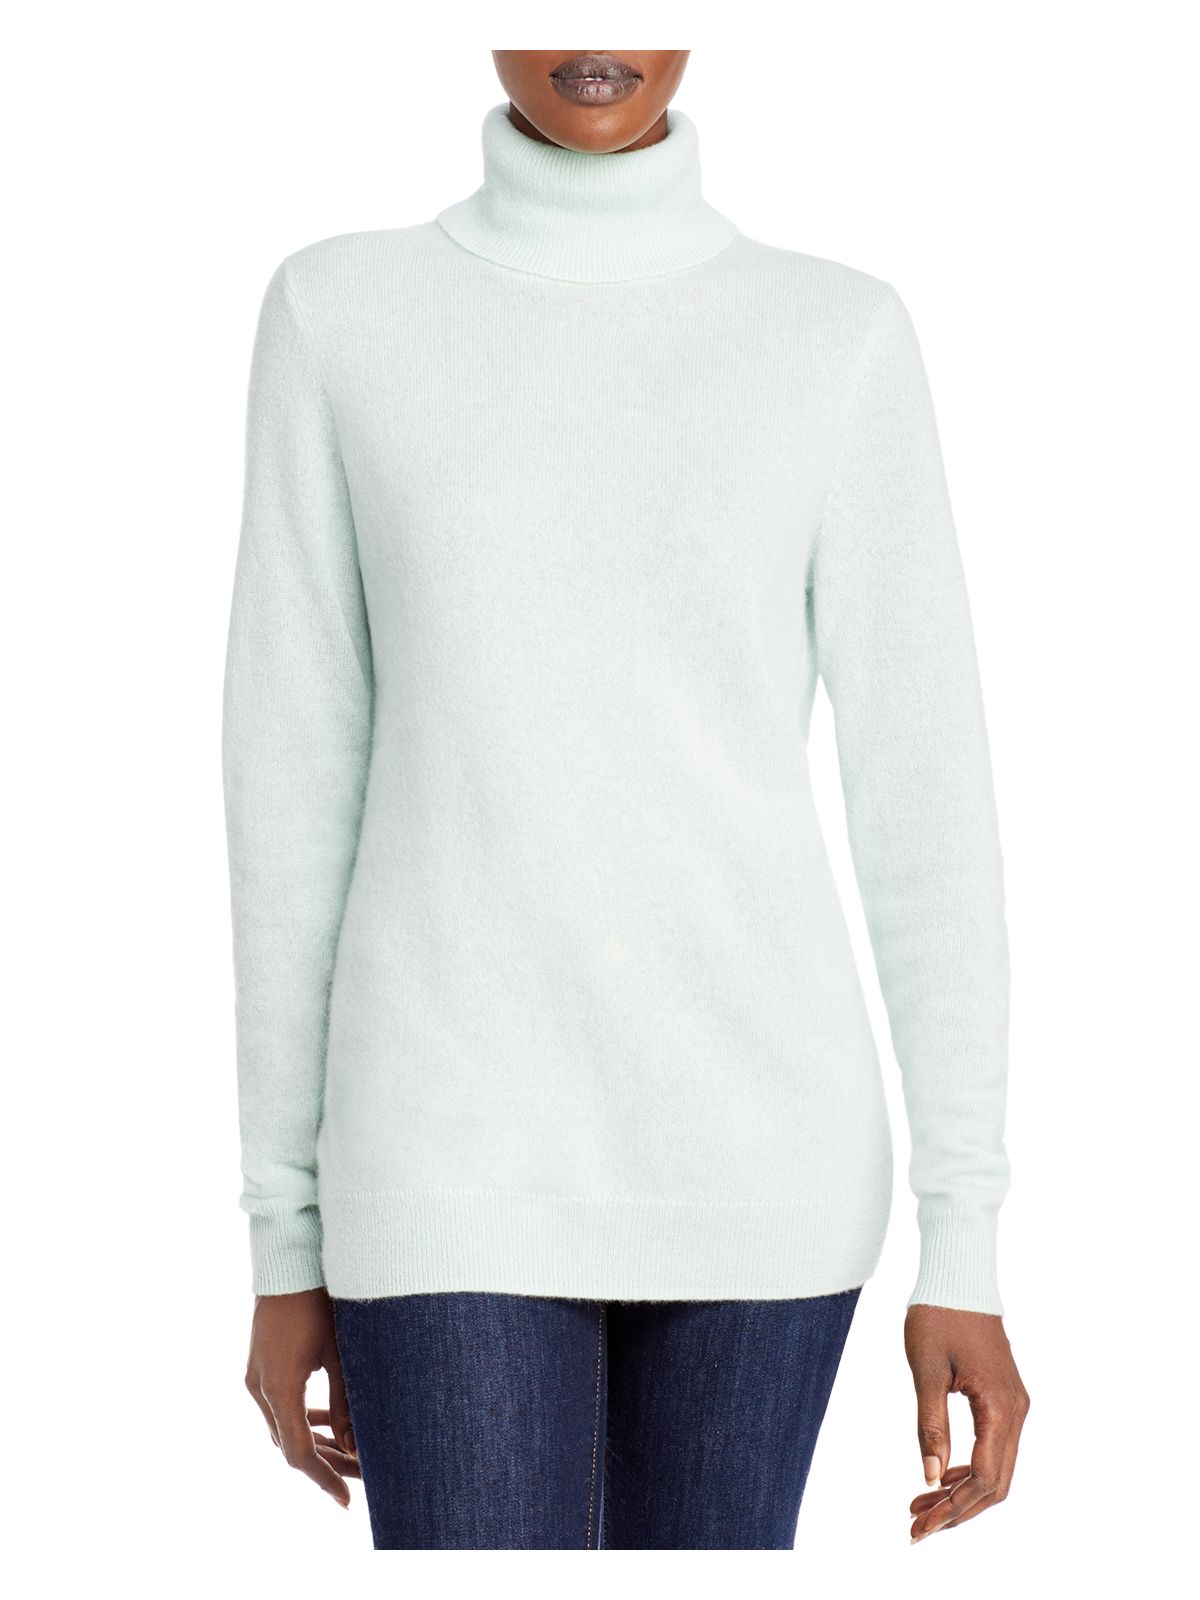 Designer Brand Womens Green Long Sleeve Turtle Neck Sweater XS